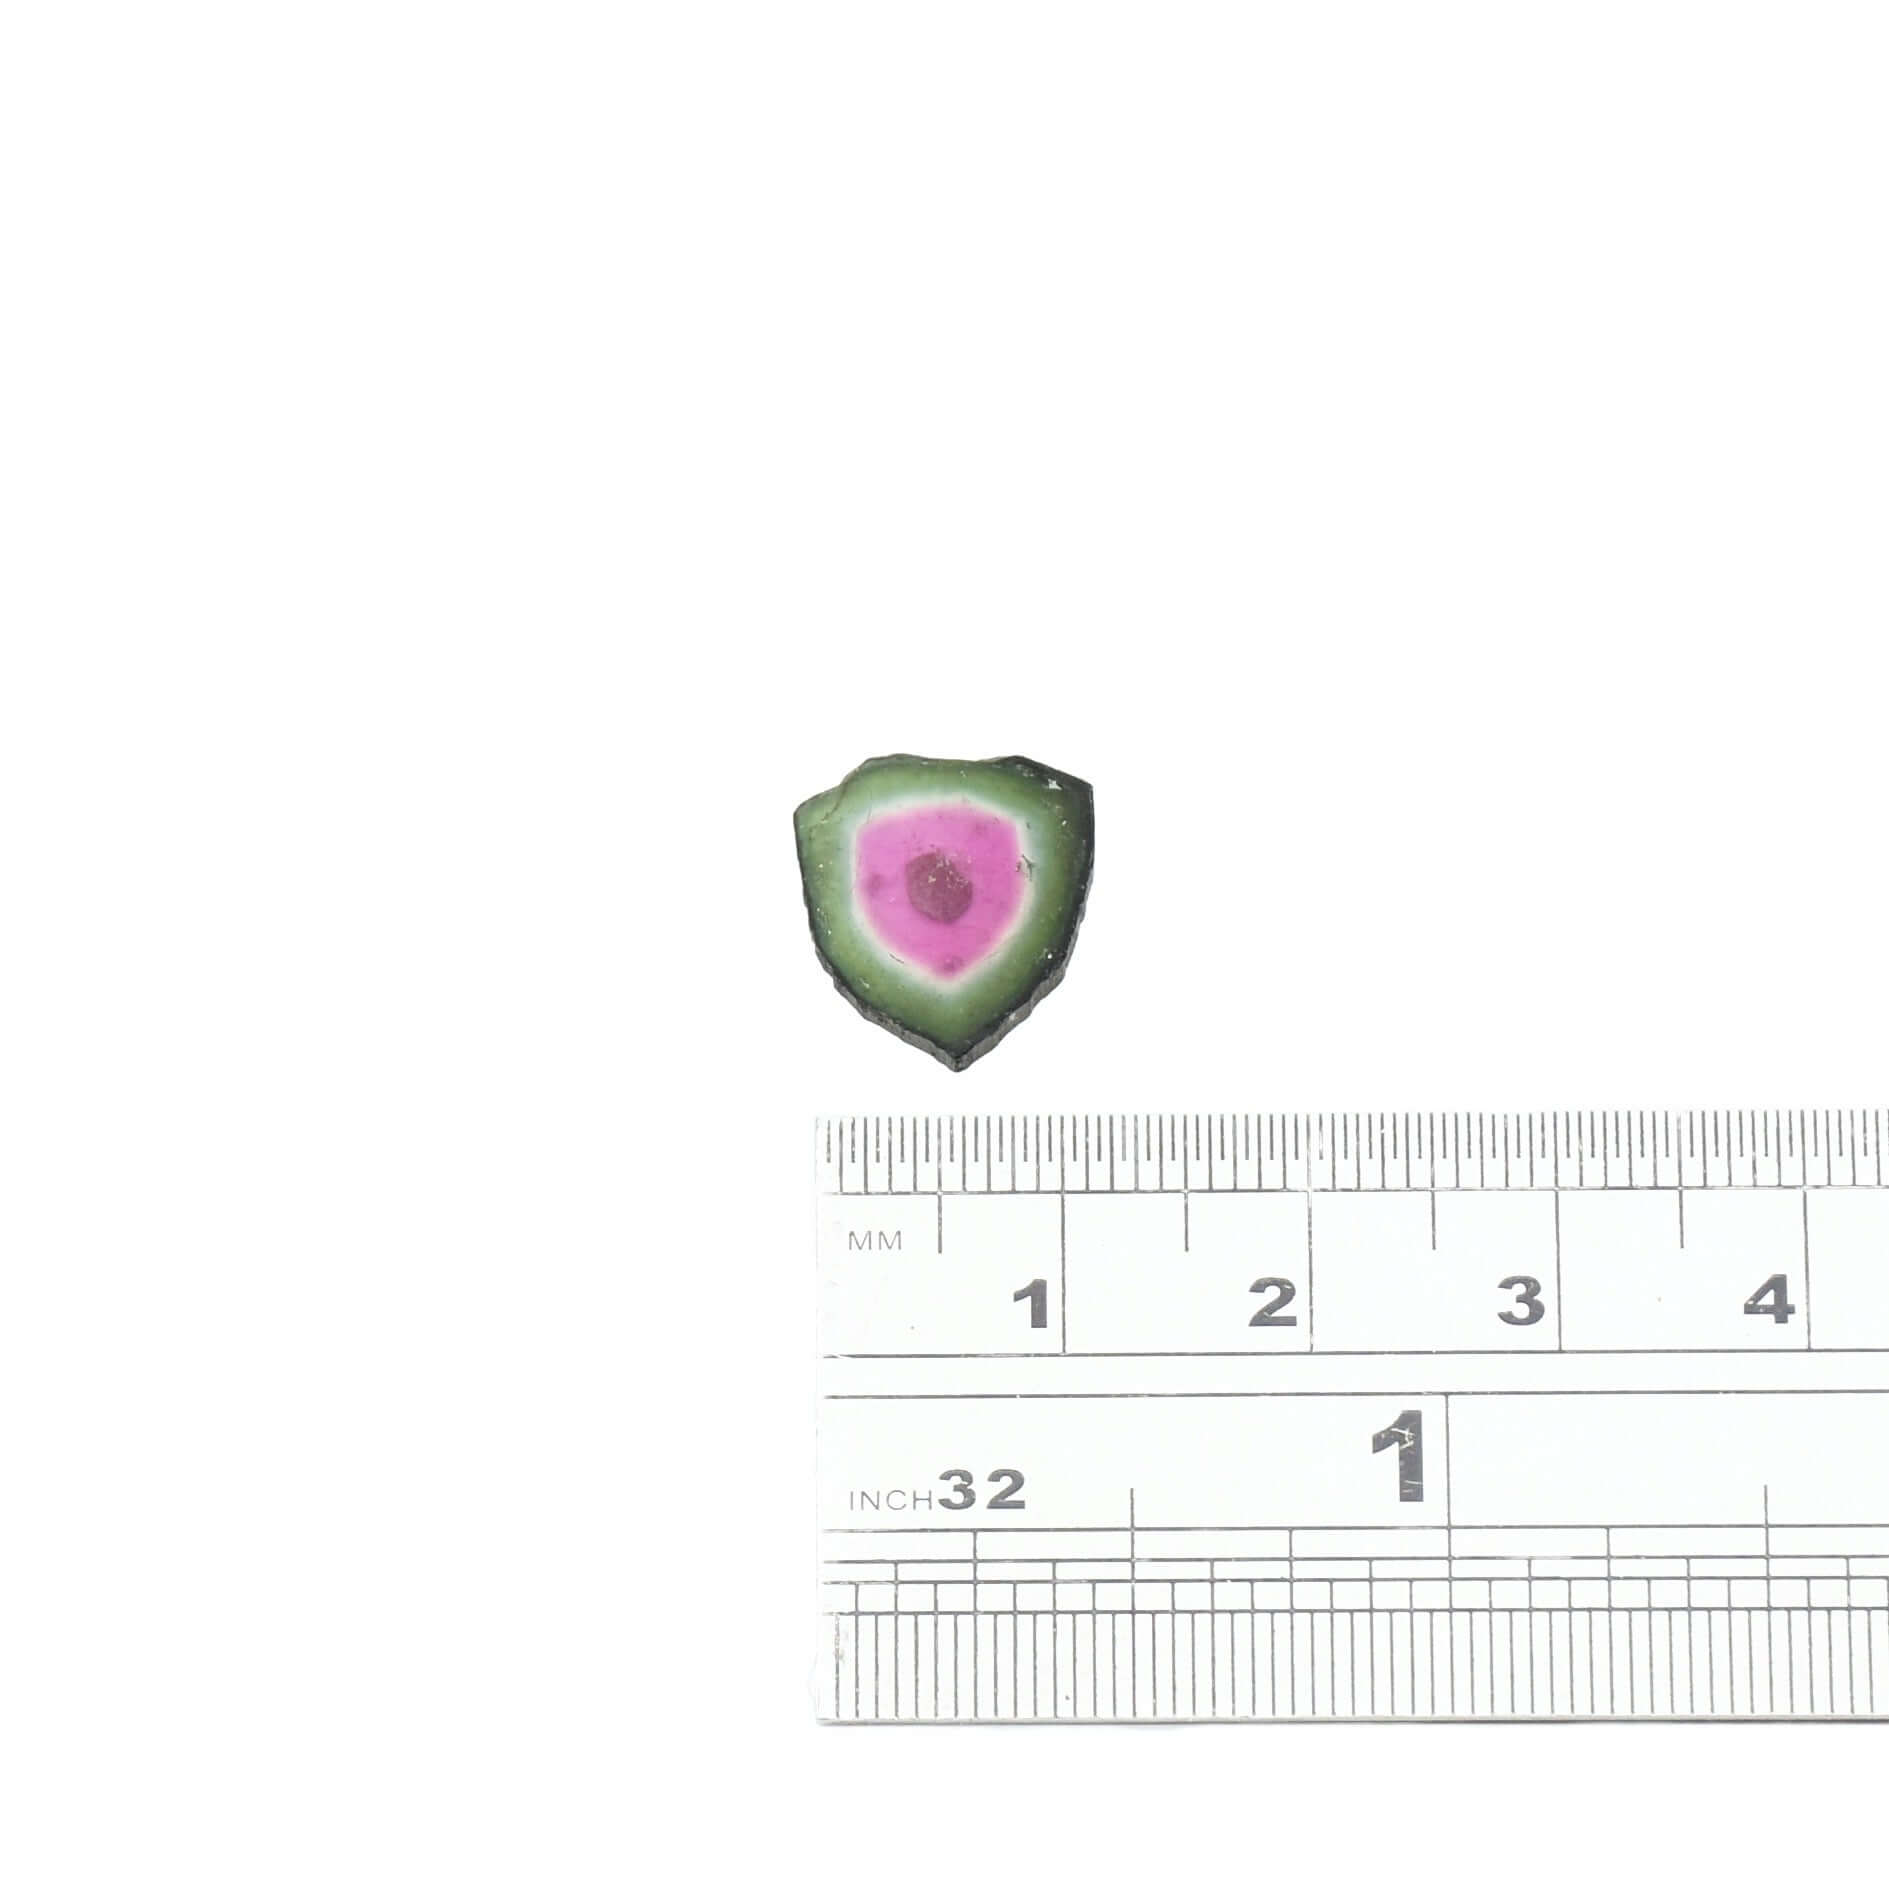 Dark green and deep pink watermelon tourmaline gemstone ready for a custom ring